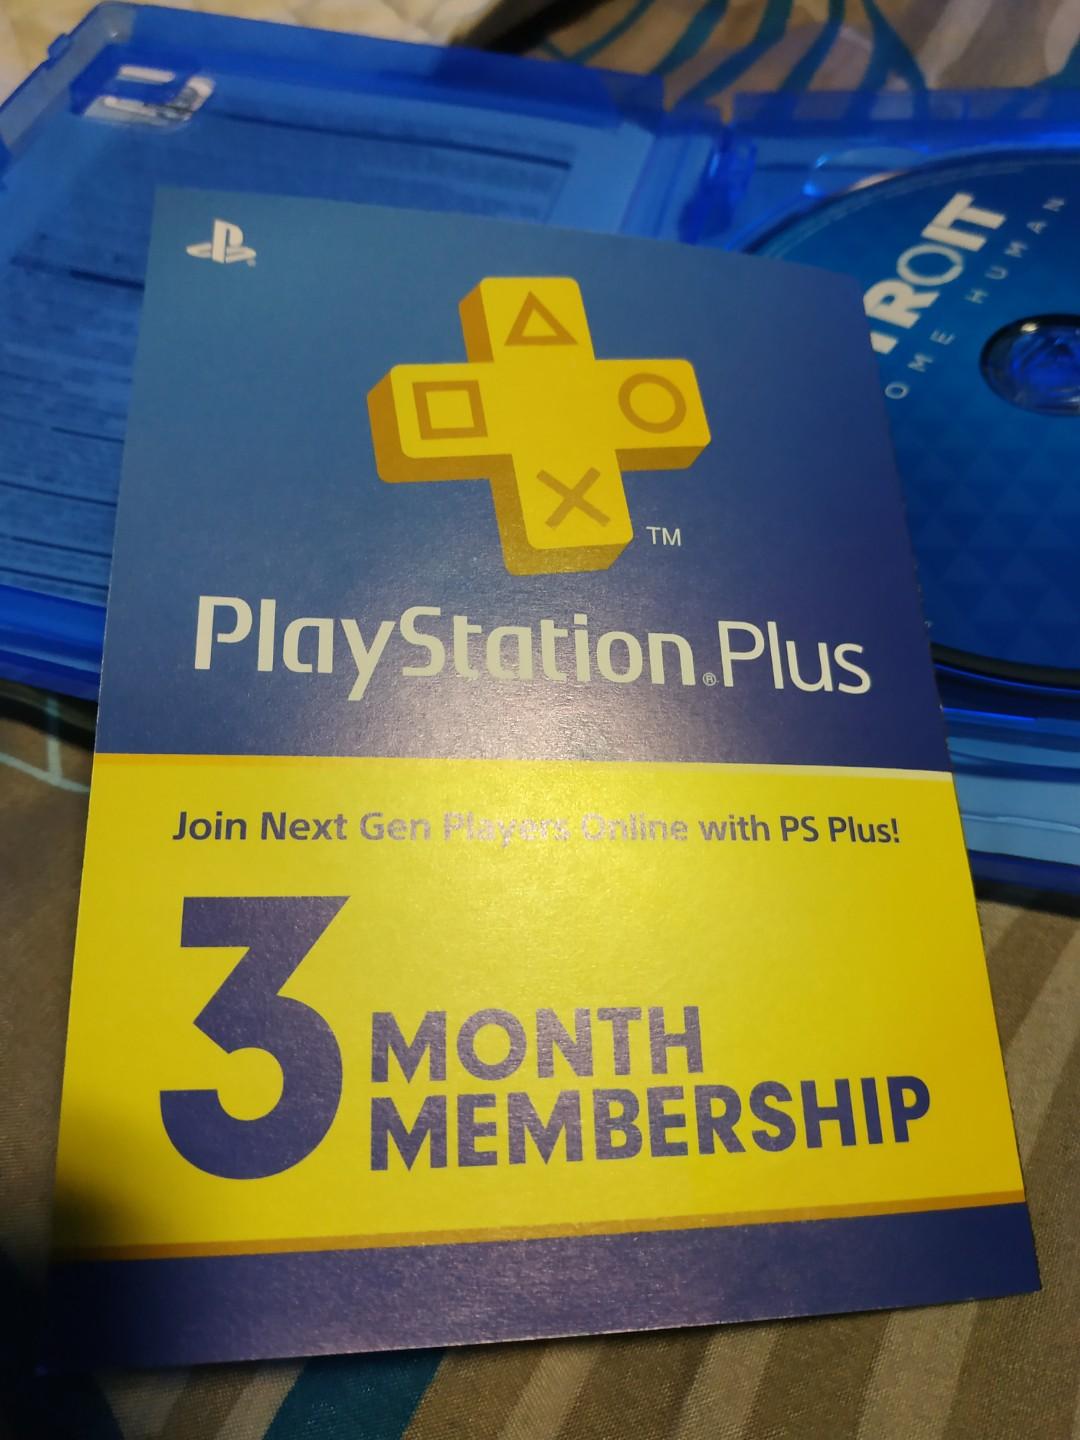 3 month playstation plus membership